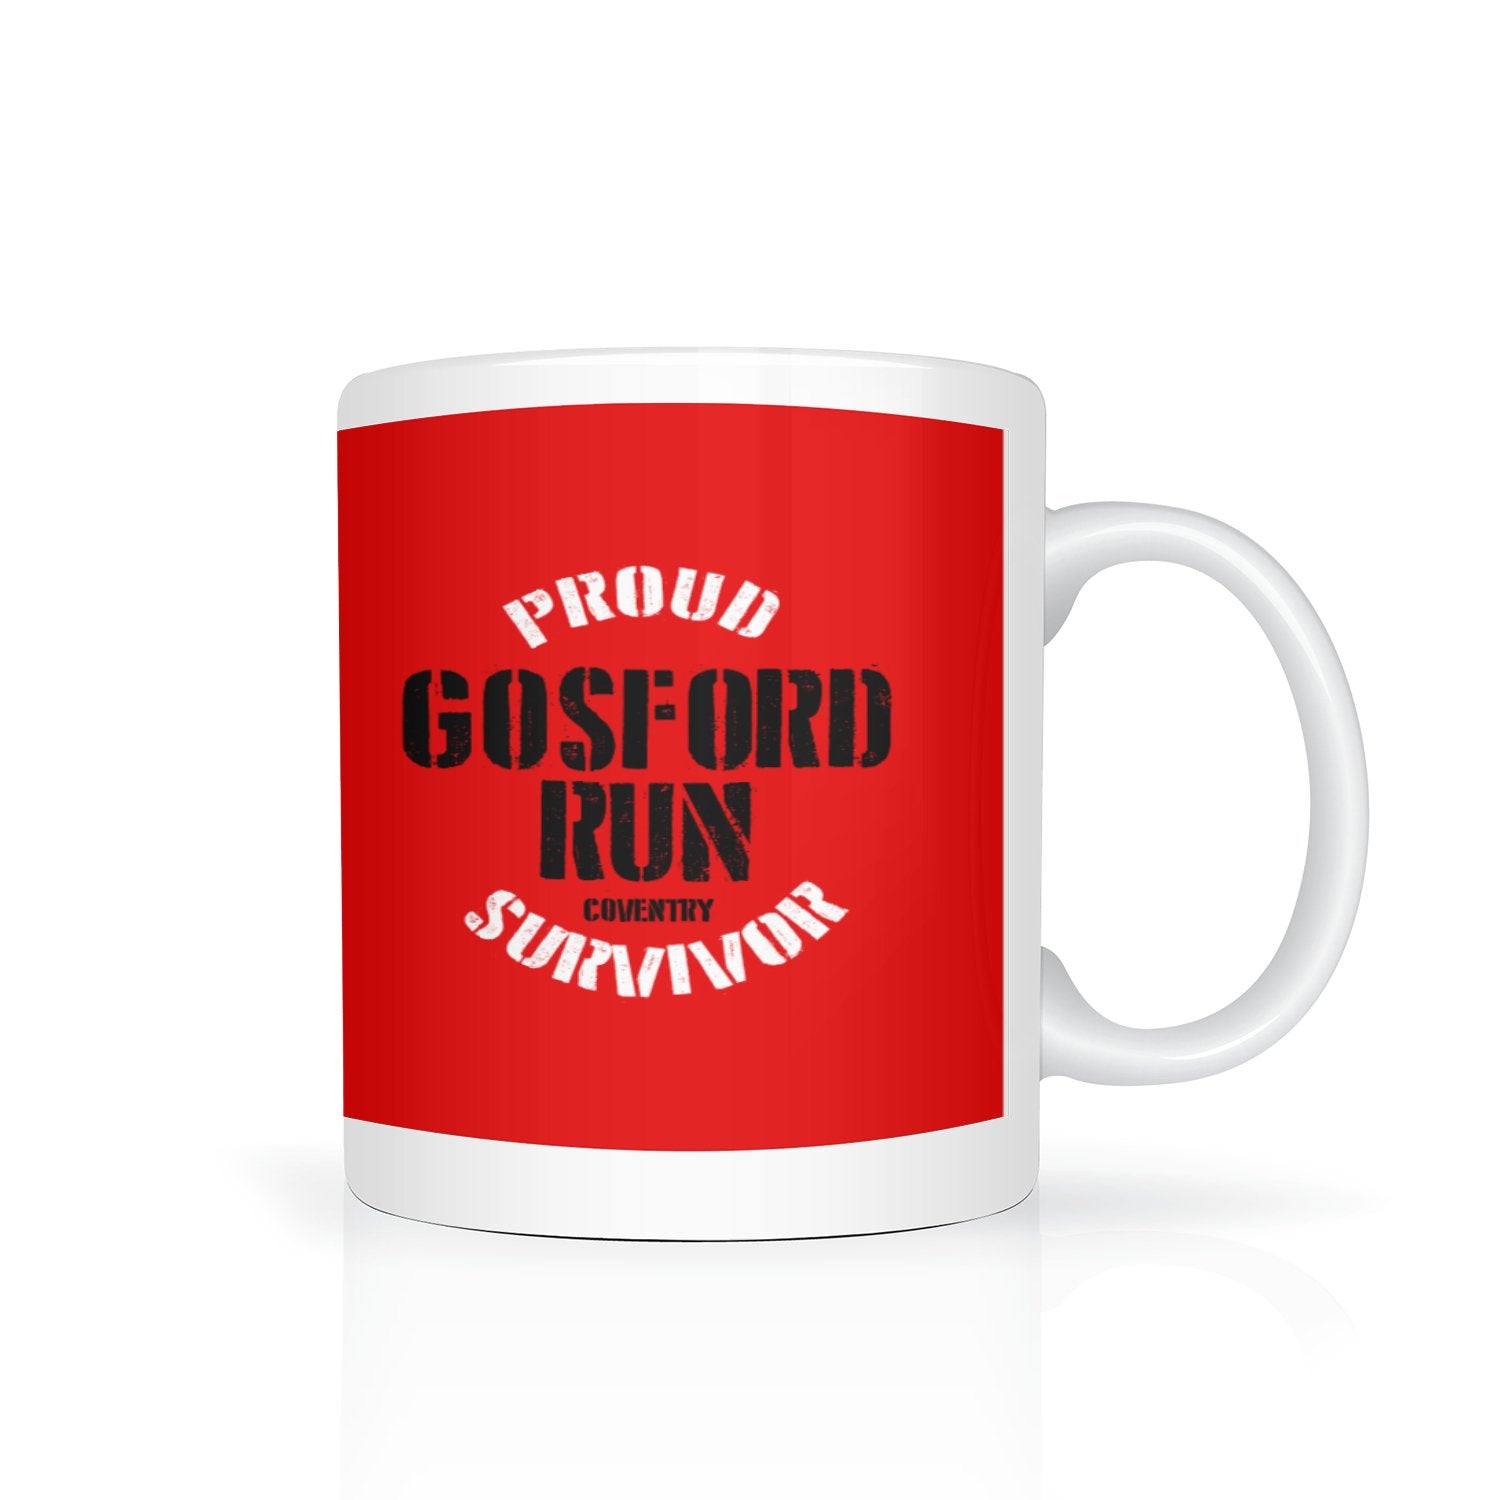 Gosford Run Survivor - Coventry - mug - Dirty Stop Outs